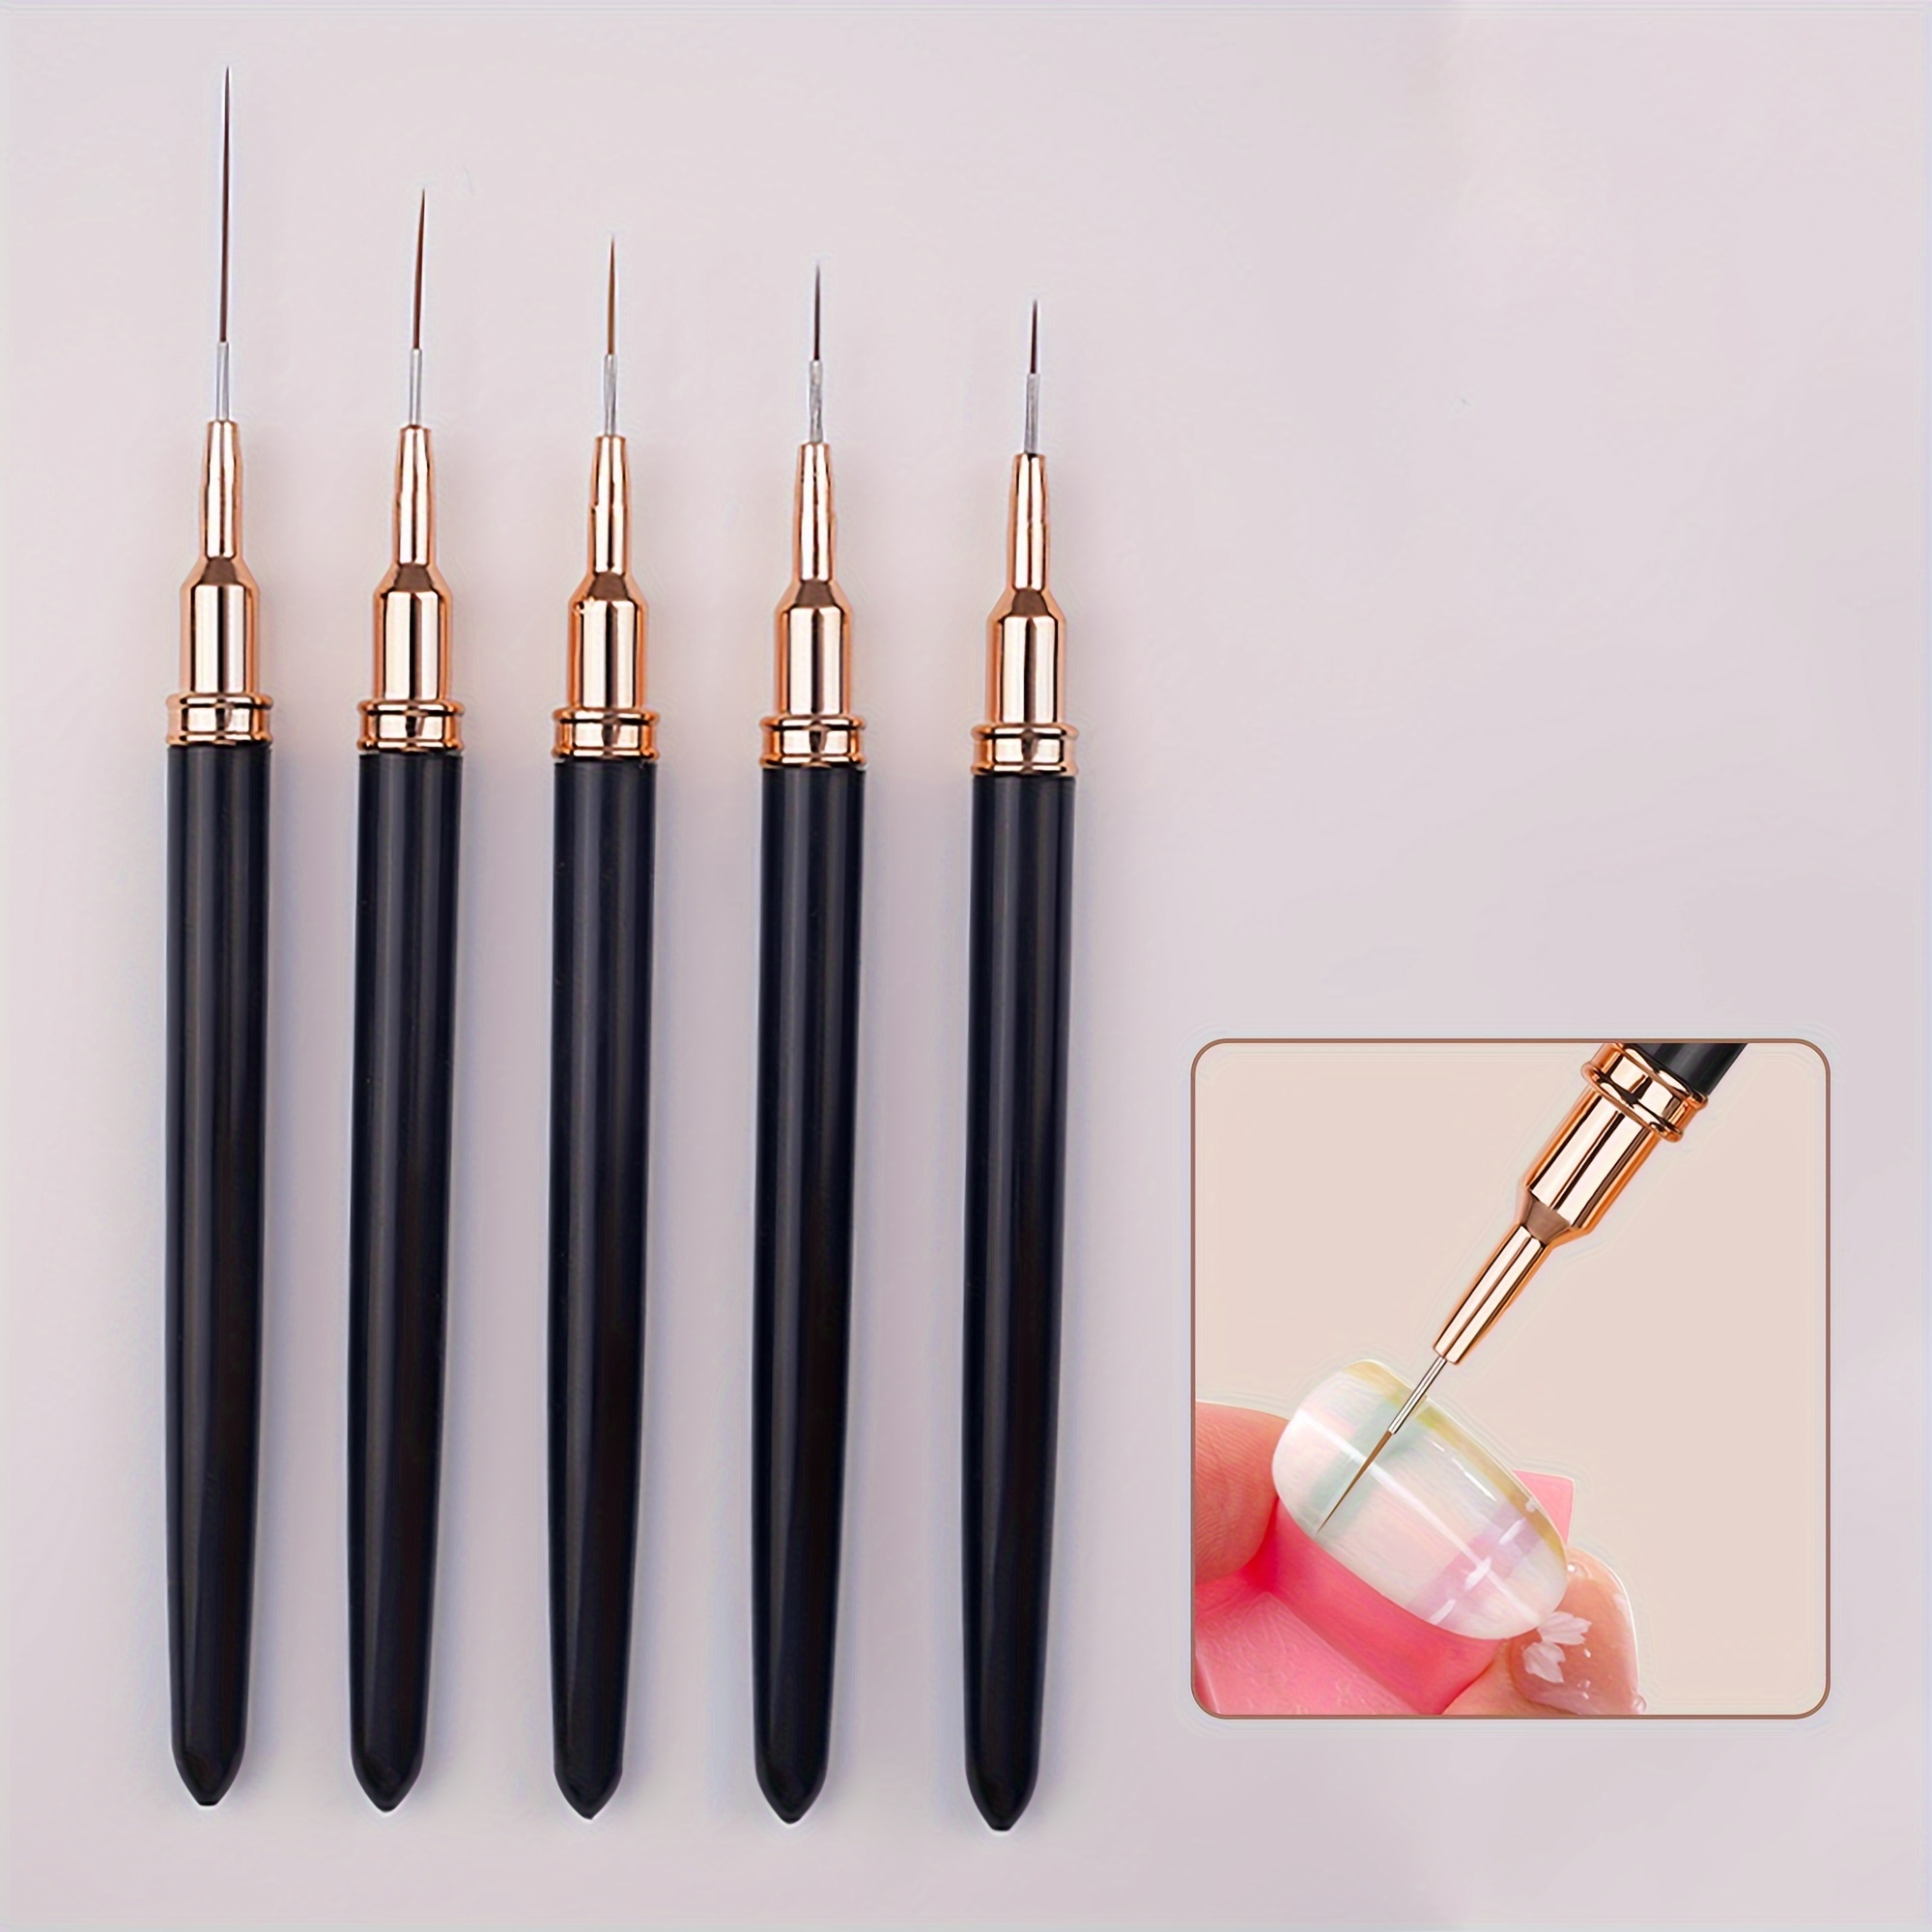 

artist's Choice" 5-piece Ultra-fine Nail Art Liner Brush Set - Precision Detailing Pens For Stunning Designs, Formaldehyde-free